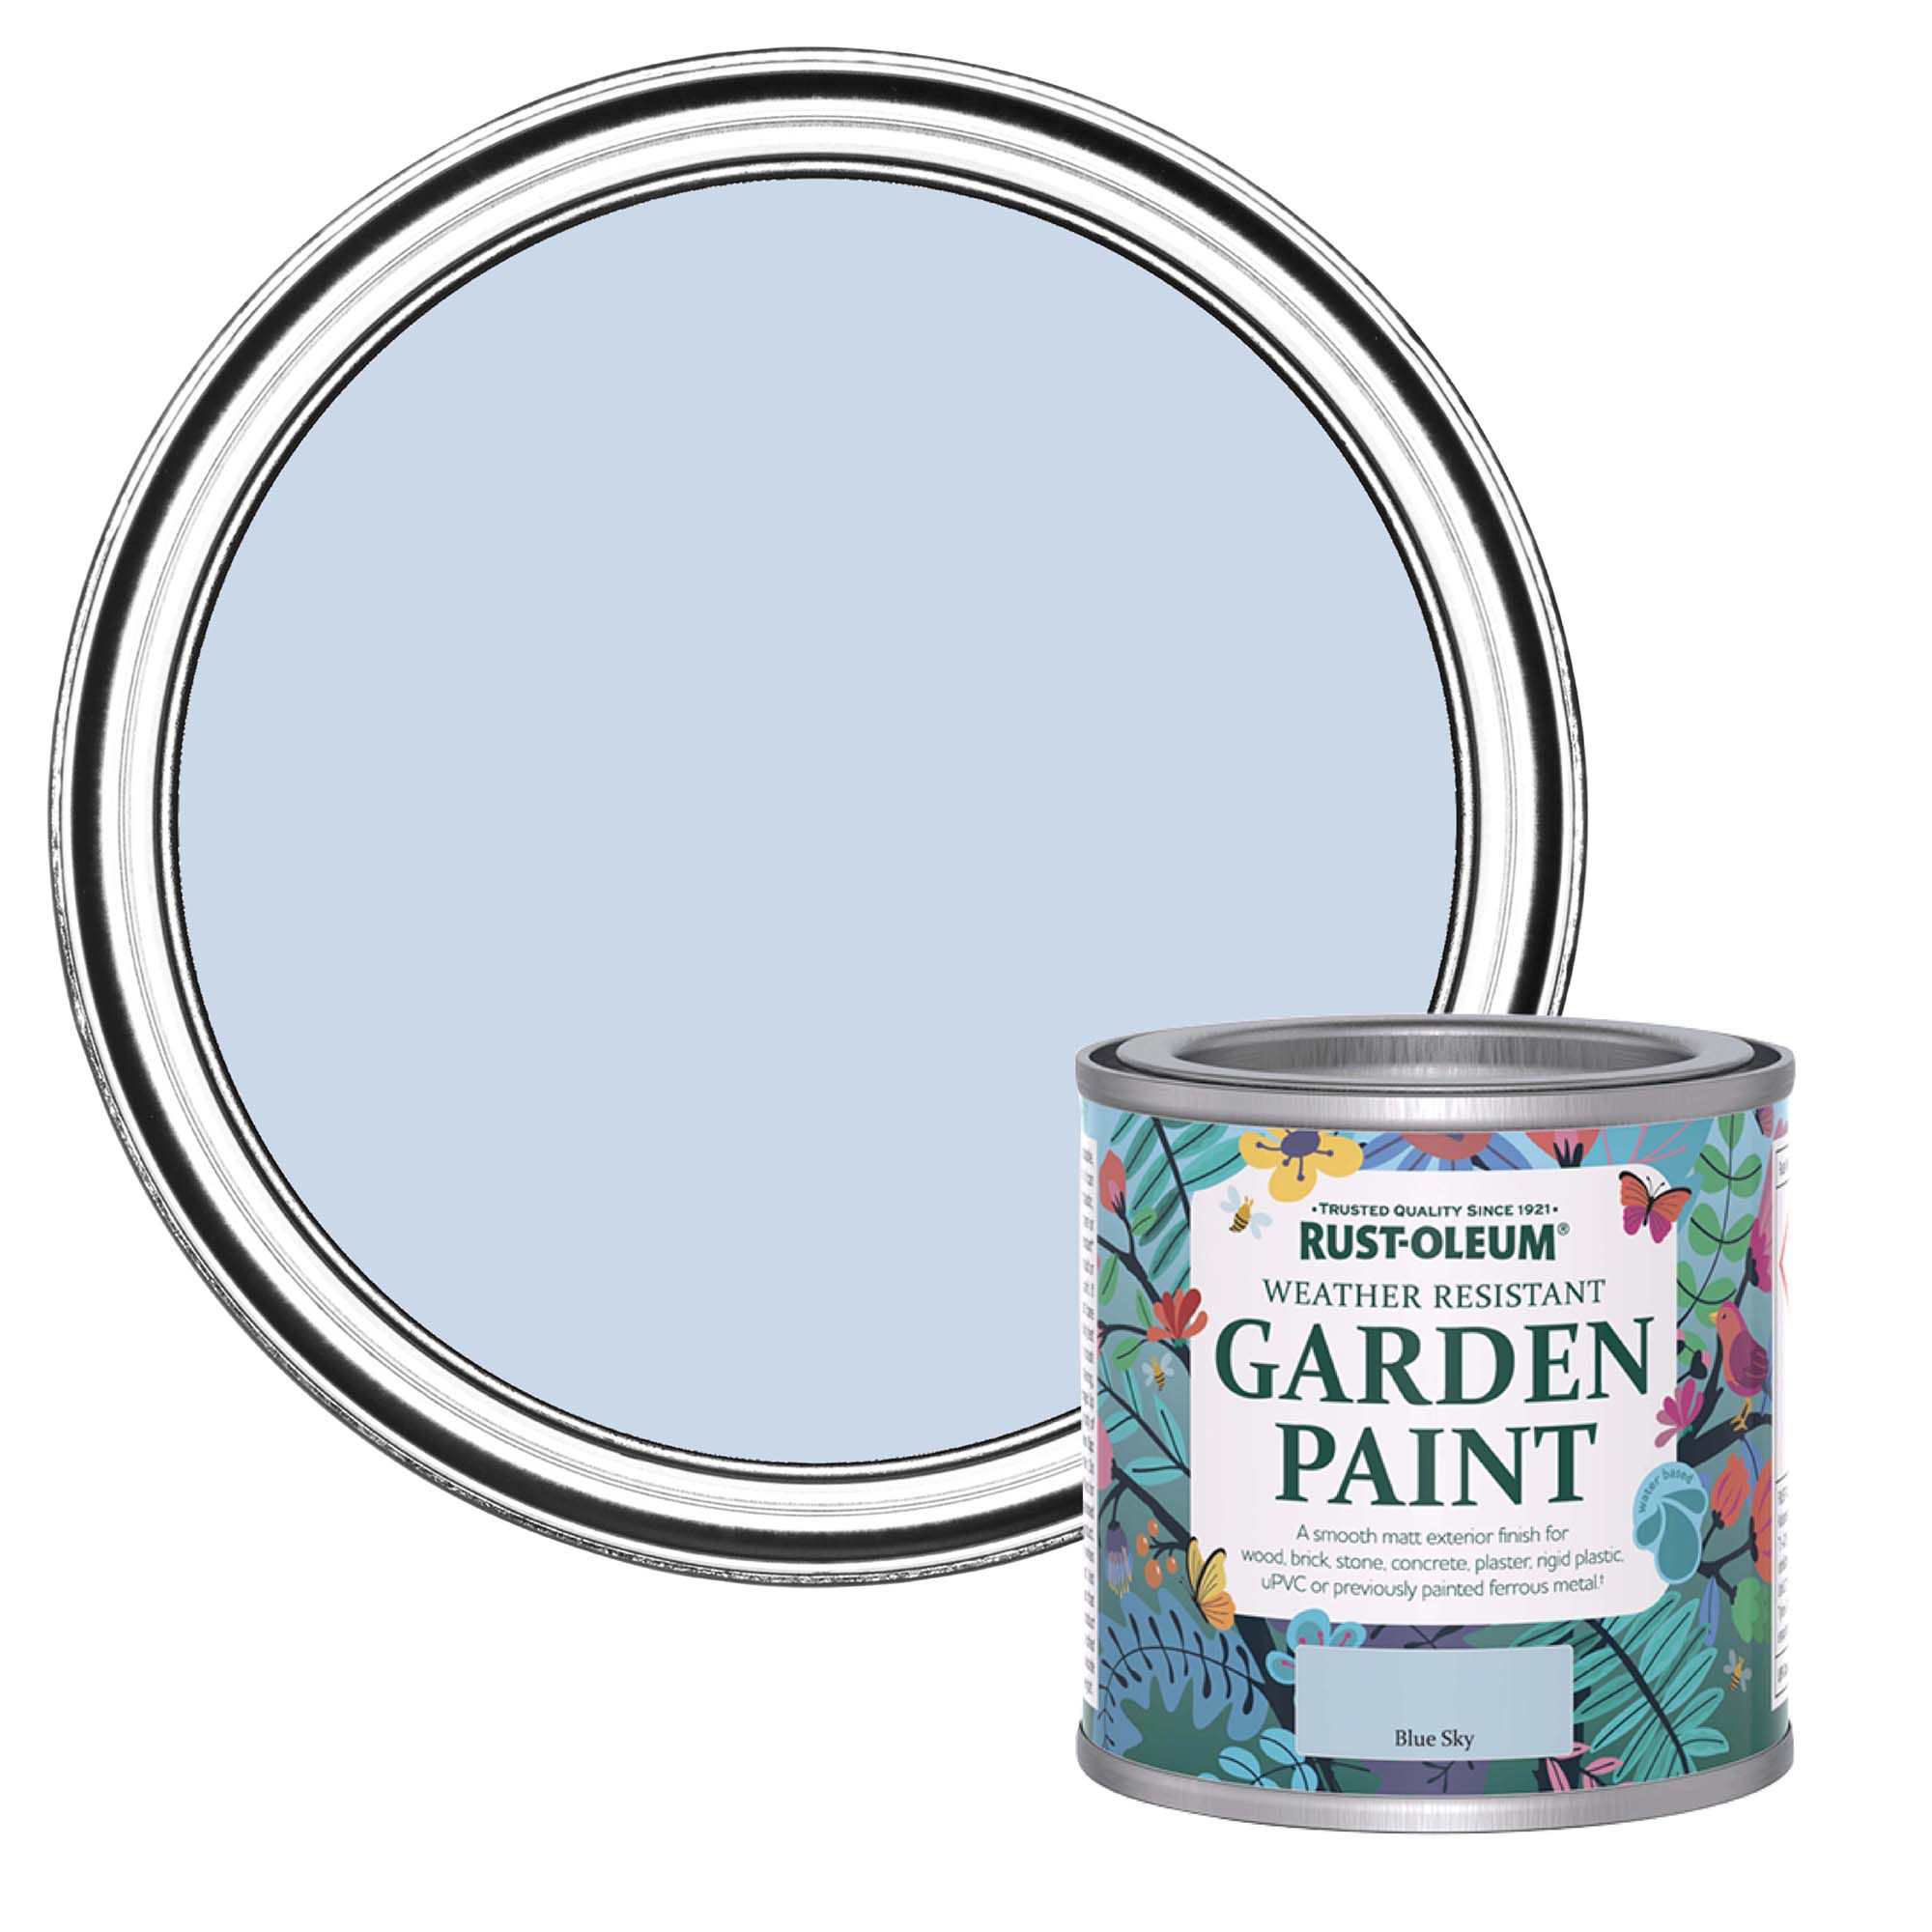 Rust-Oleum Garden Paint Blue Sky Matt Multi-surface Garden Paint, 125ml Tin